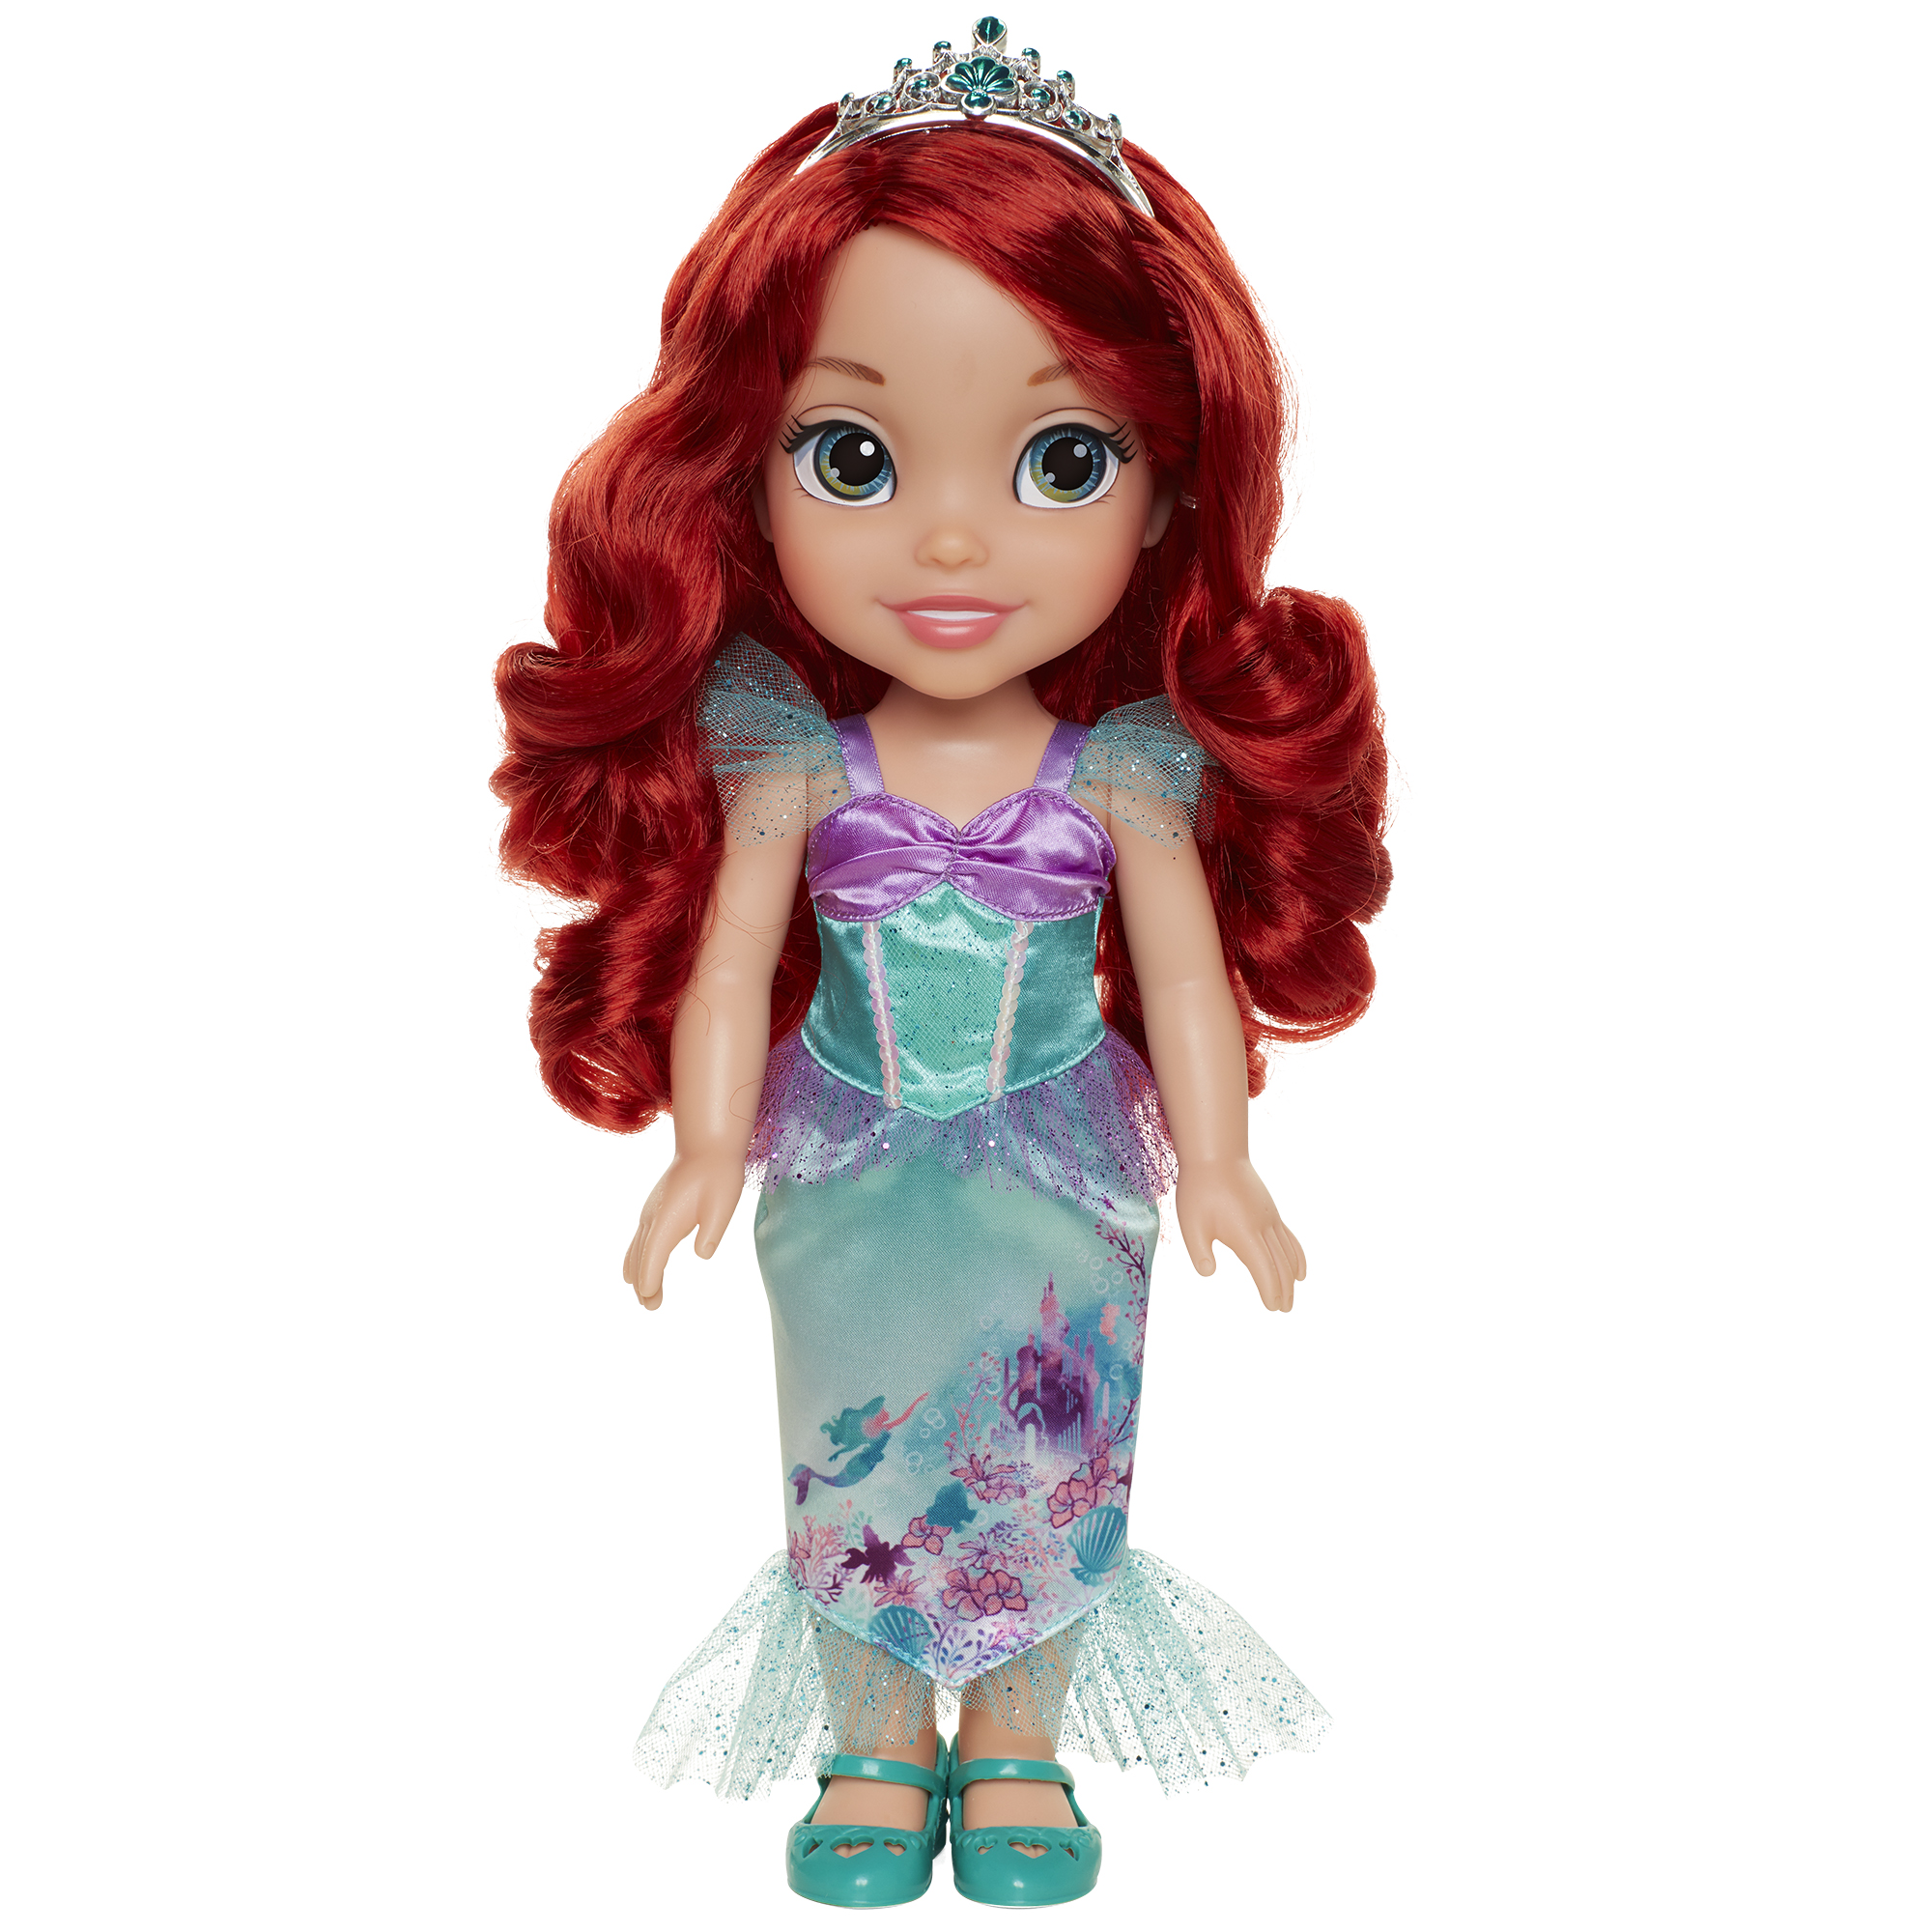 Disney Princess Explore Your World Ariel Large Fashion Doll - image 4 of 6